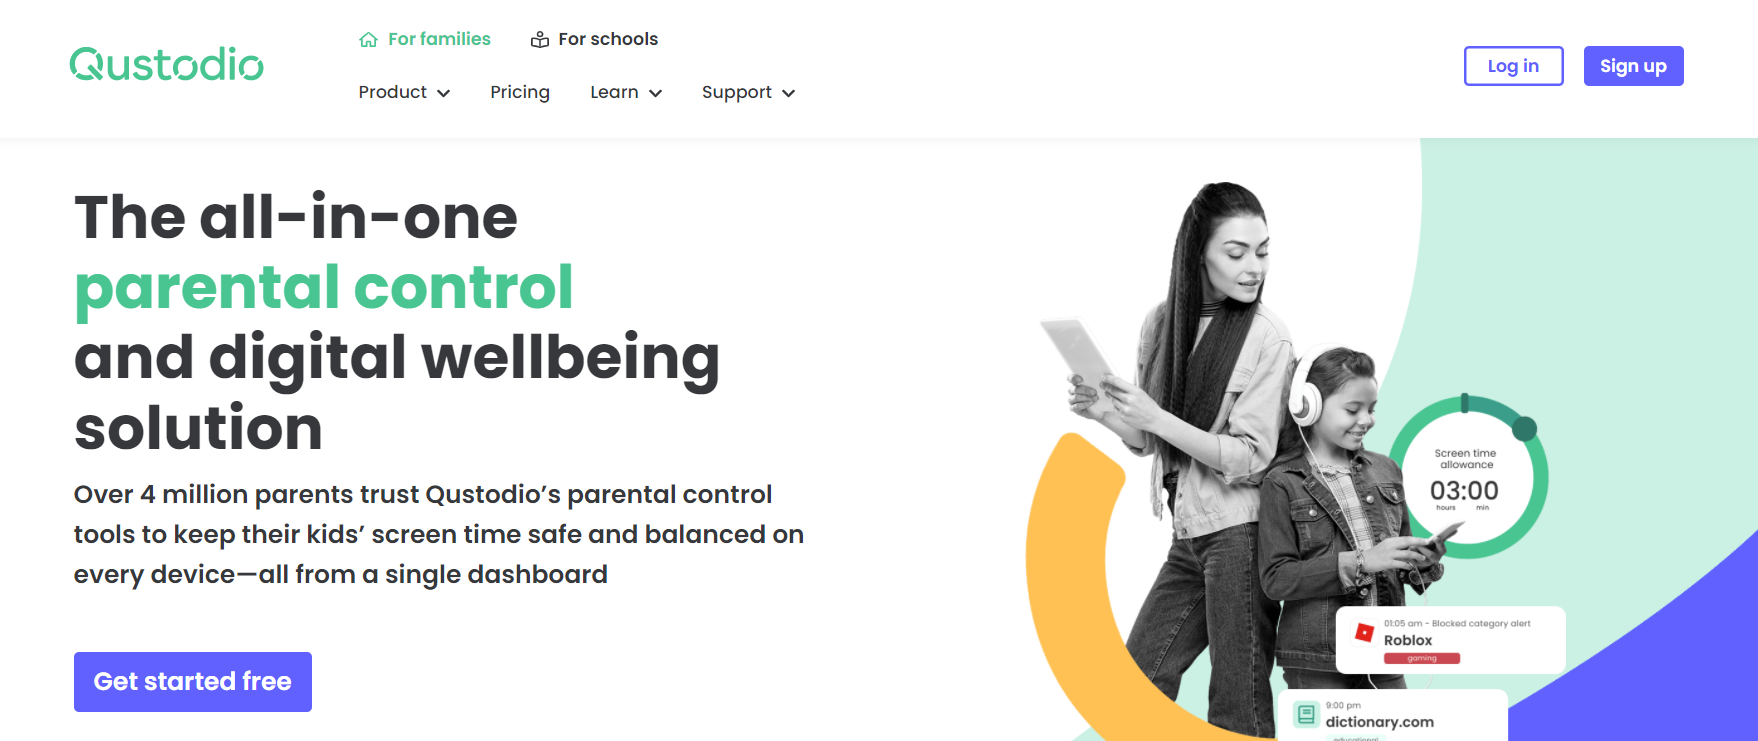 Qustodio Alternatives: 7 Best Parental Control Apps Like Qustodio